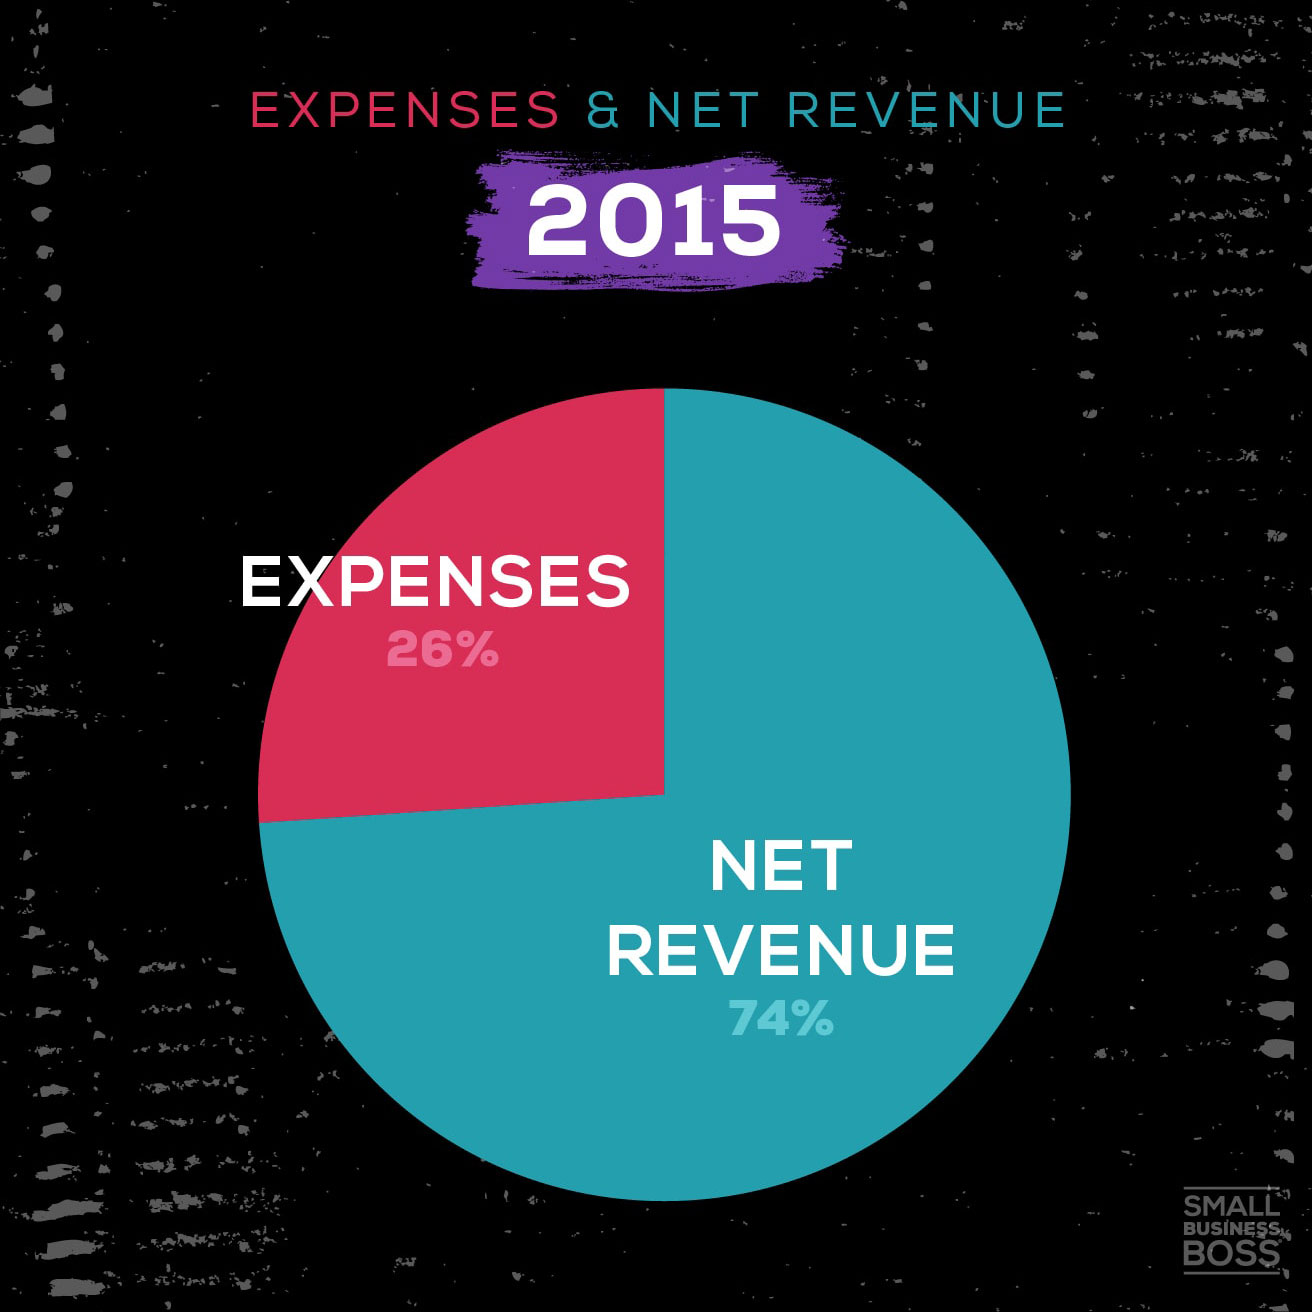 pie chart depicting expenses vs revenue in 2015